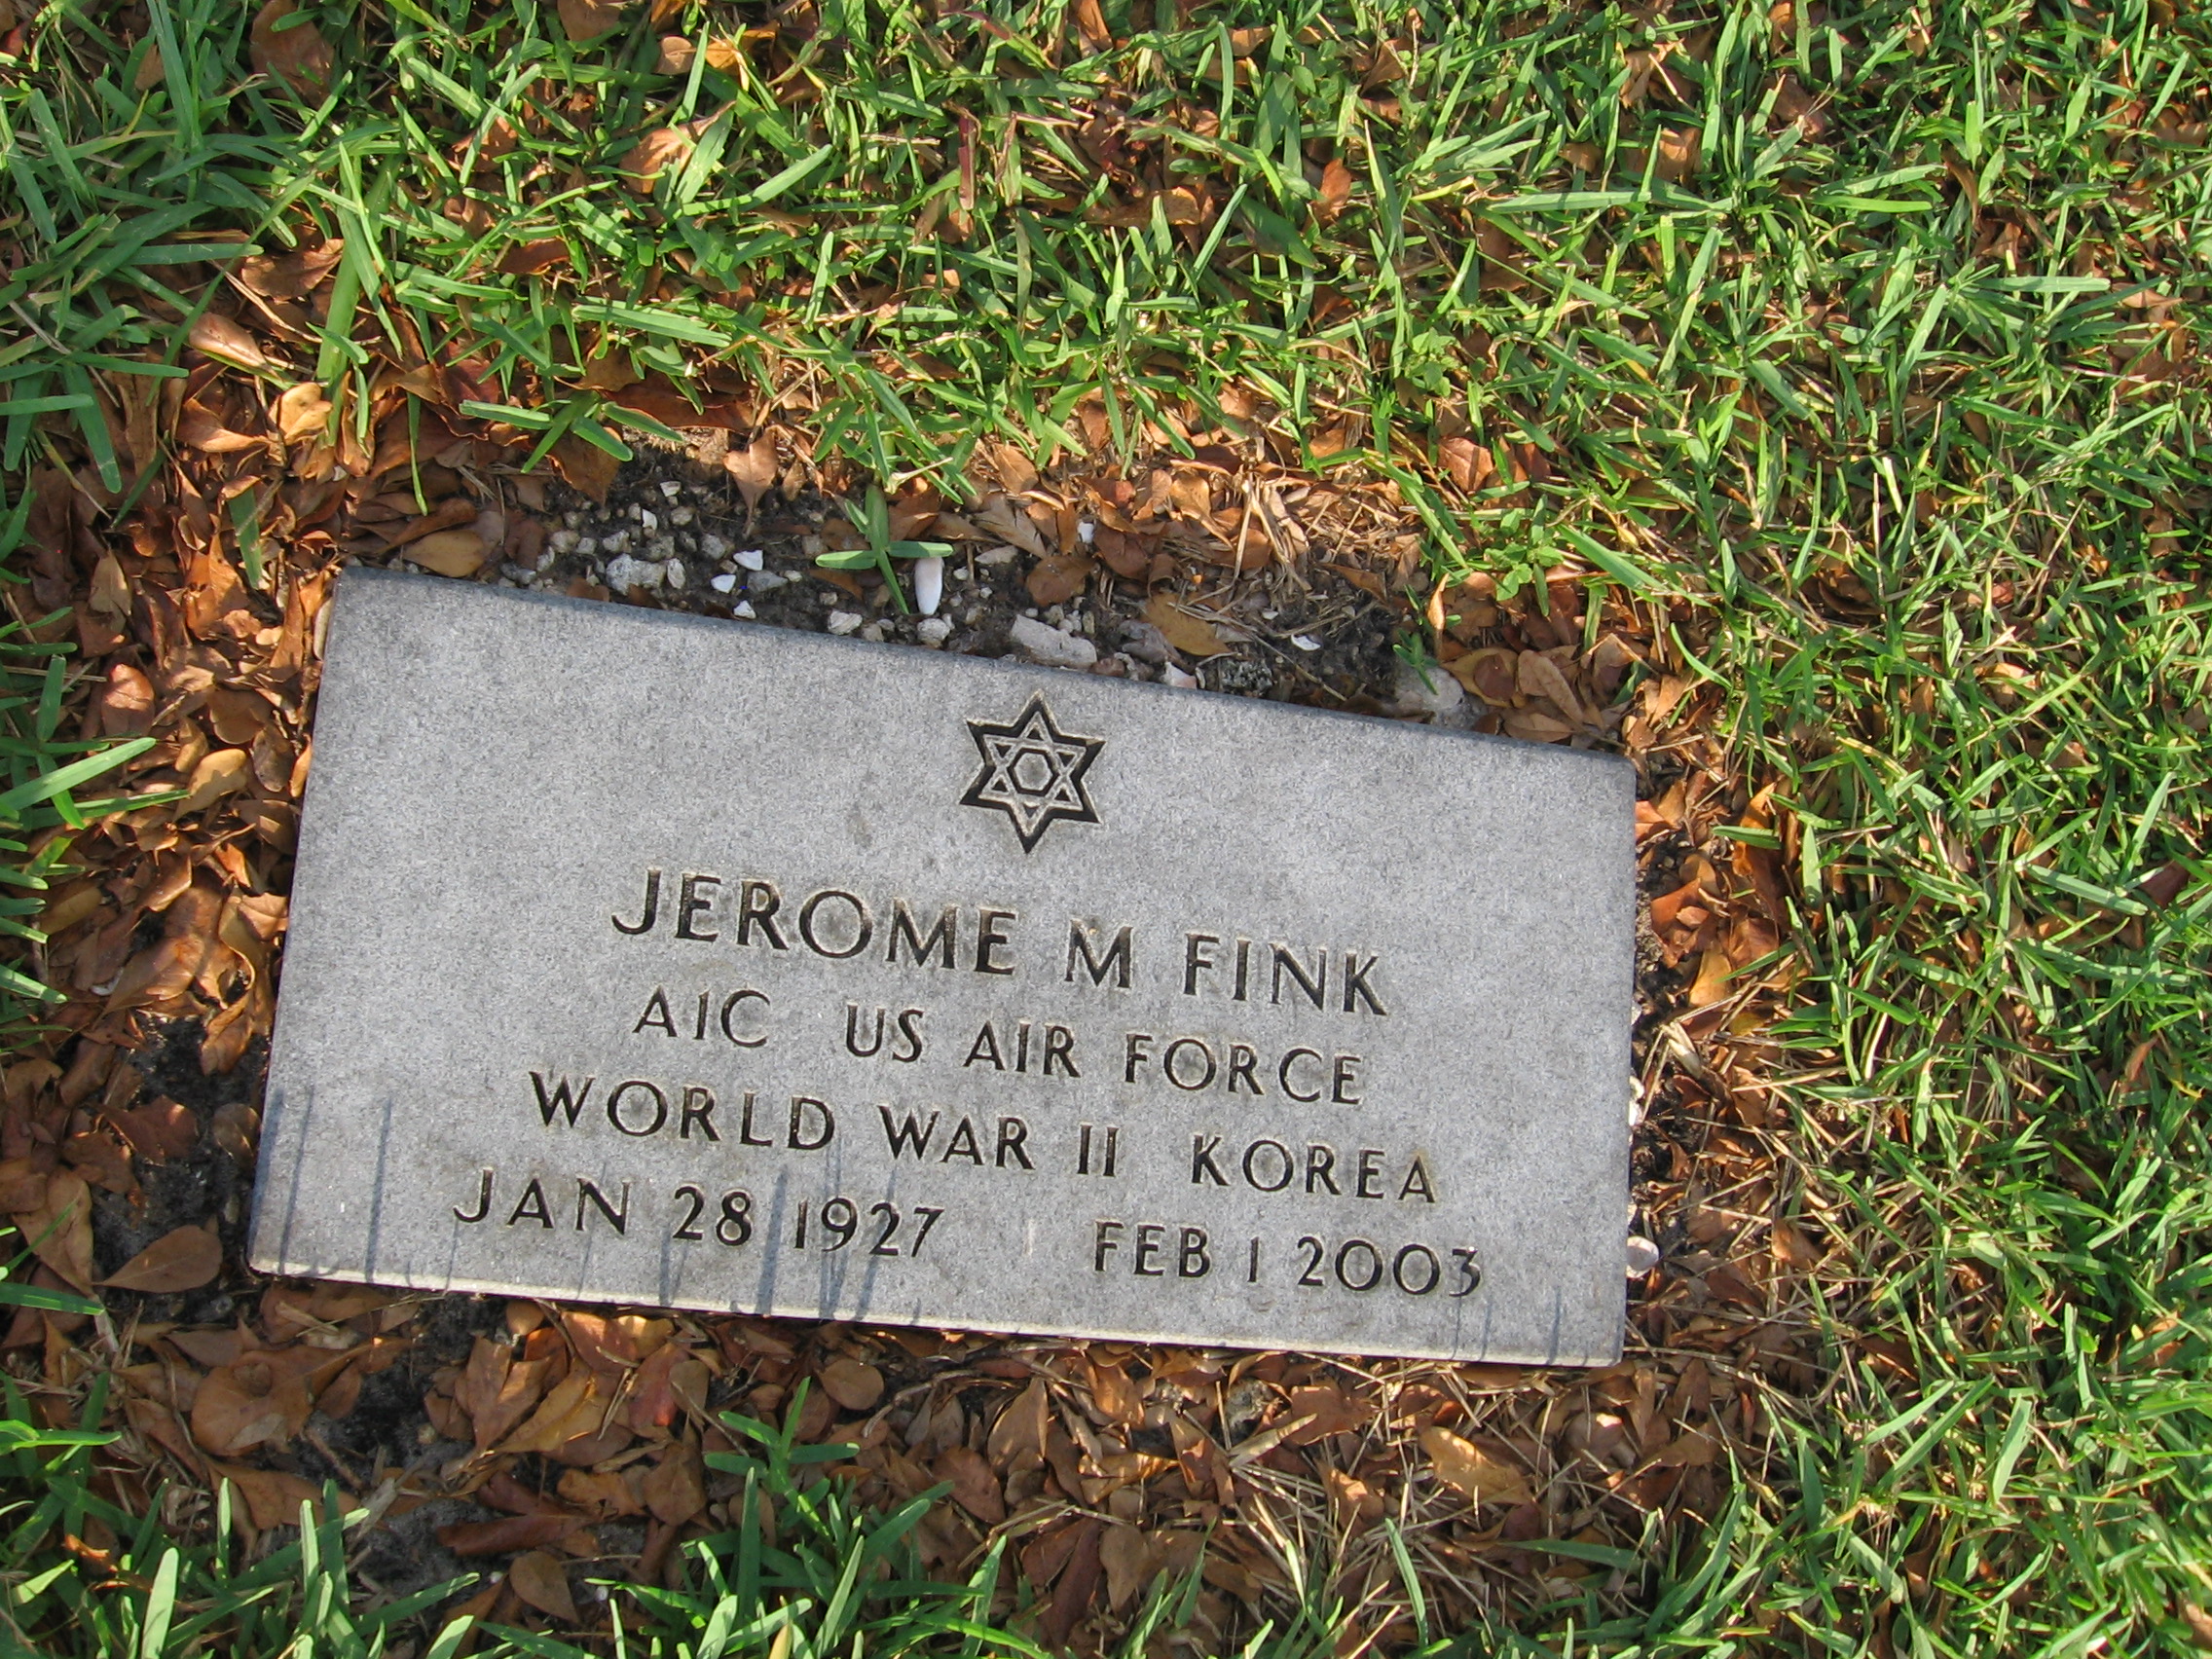 Jerome M Fink